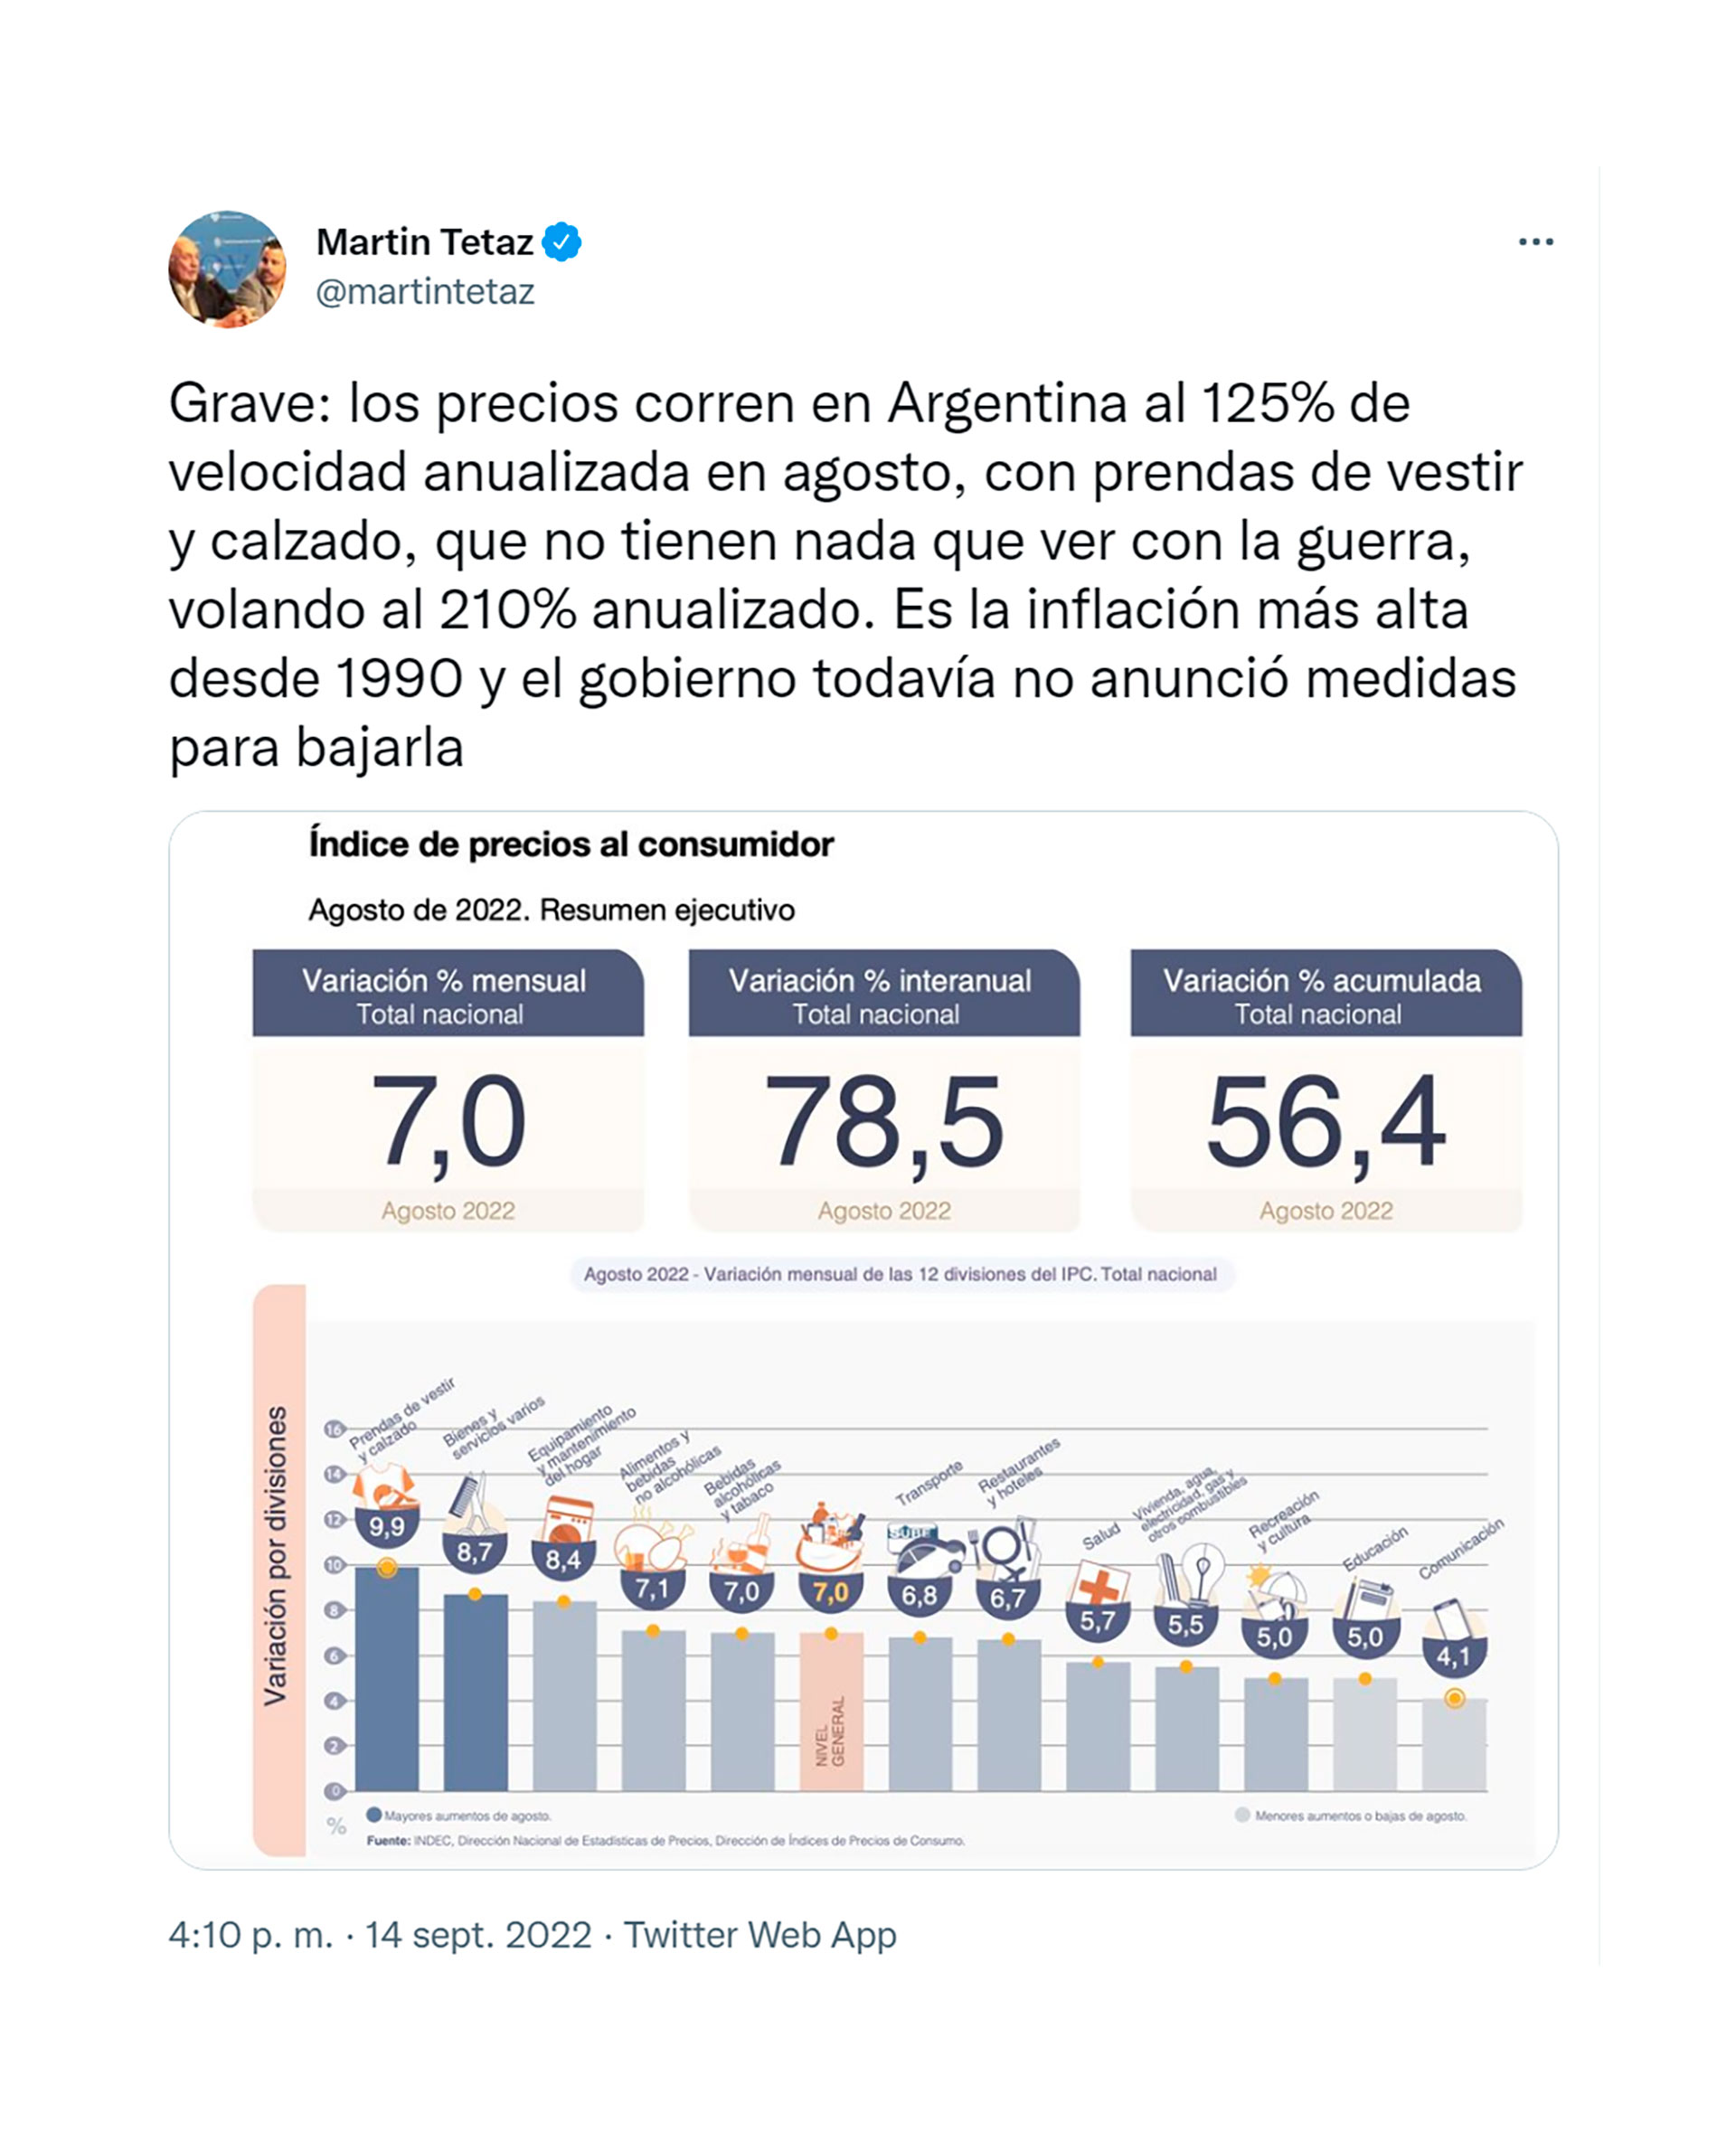 El tuit del economista radical Martín Tetaz